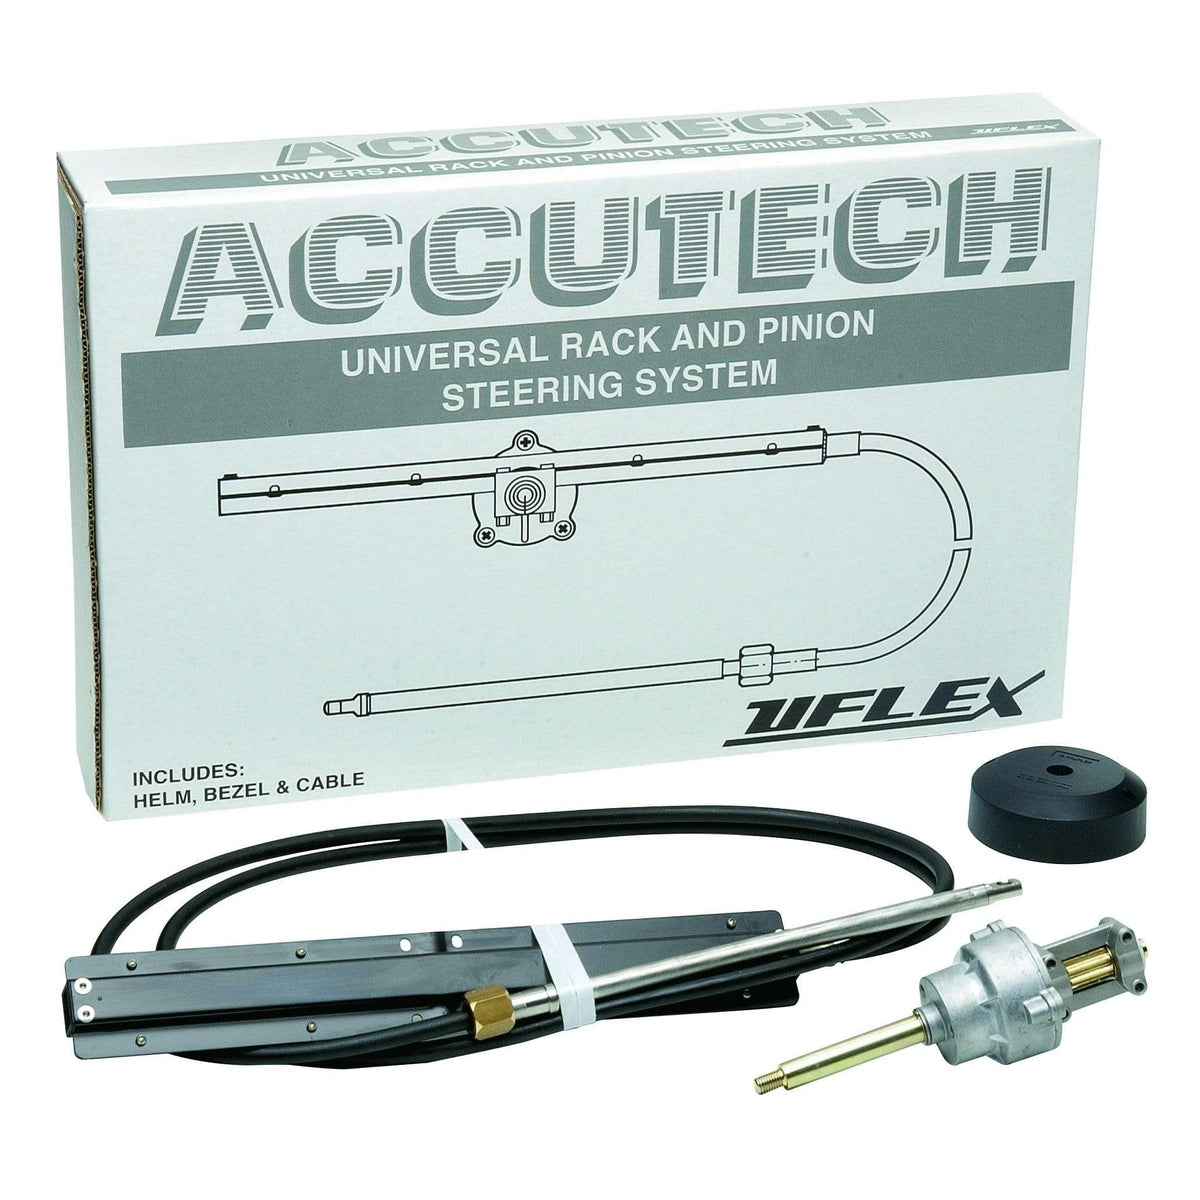 Uflex Accutech Rack Steering System 13' Kit #ACCUTECH13